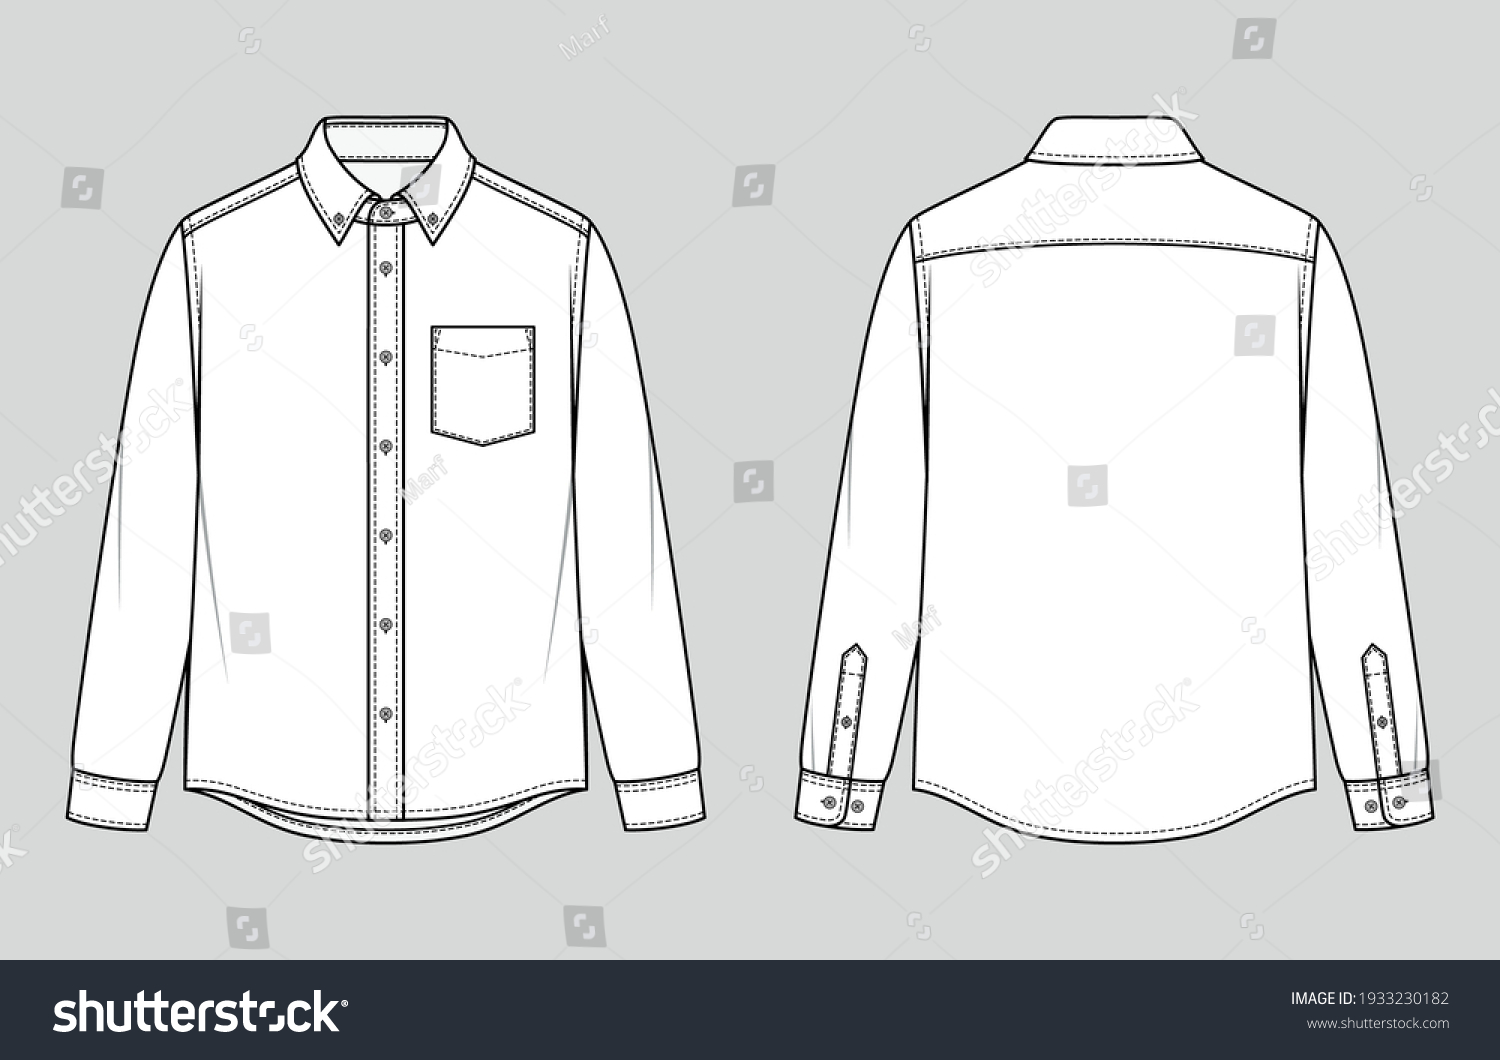 Camisa draw vector